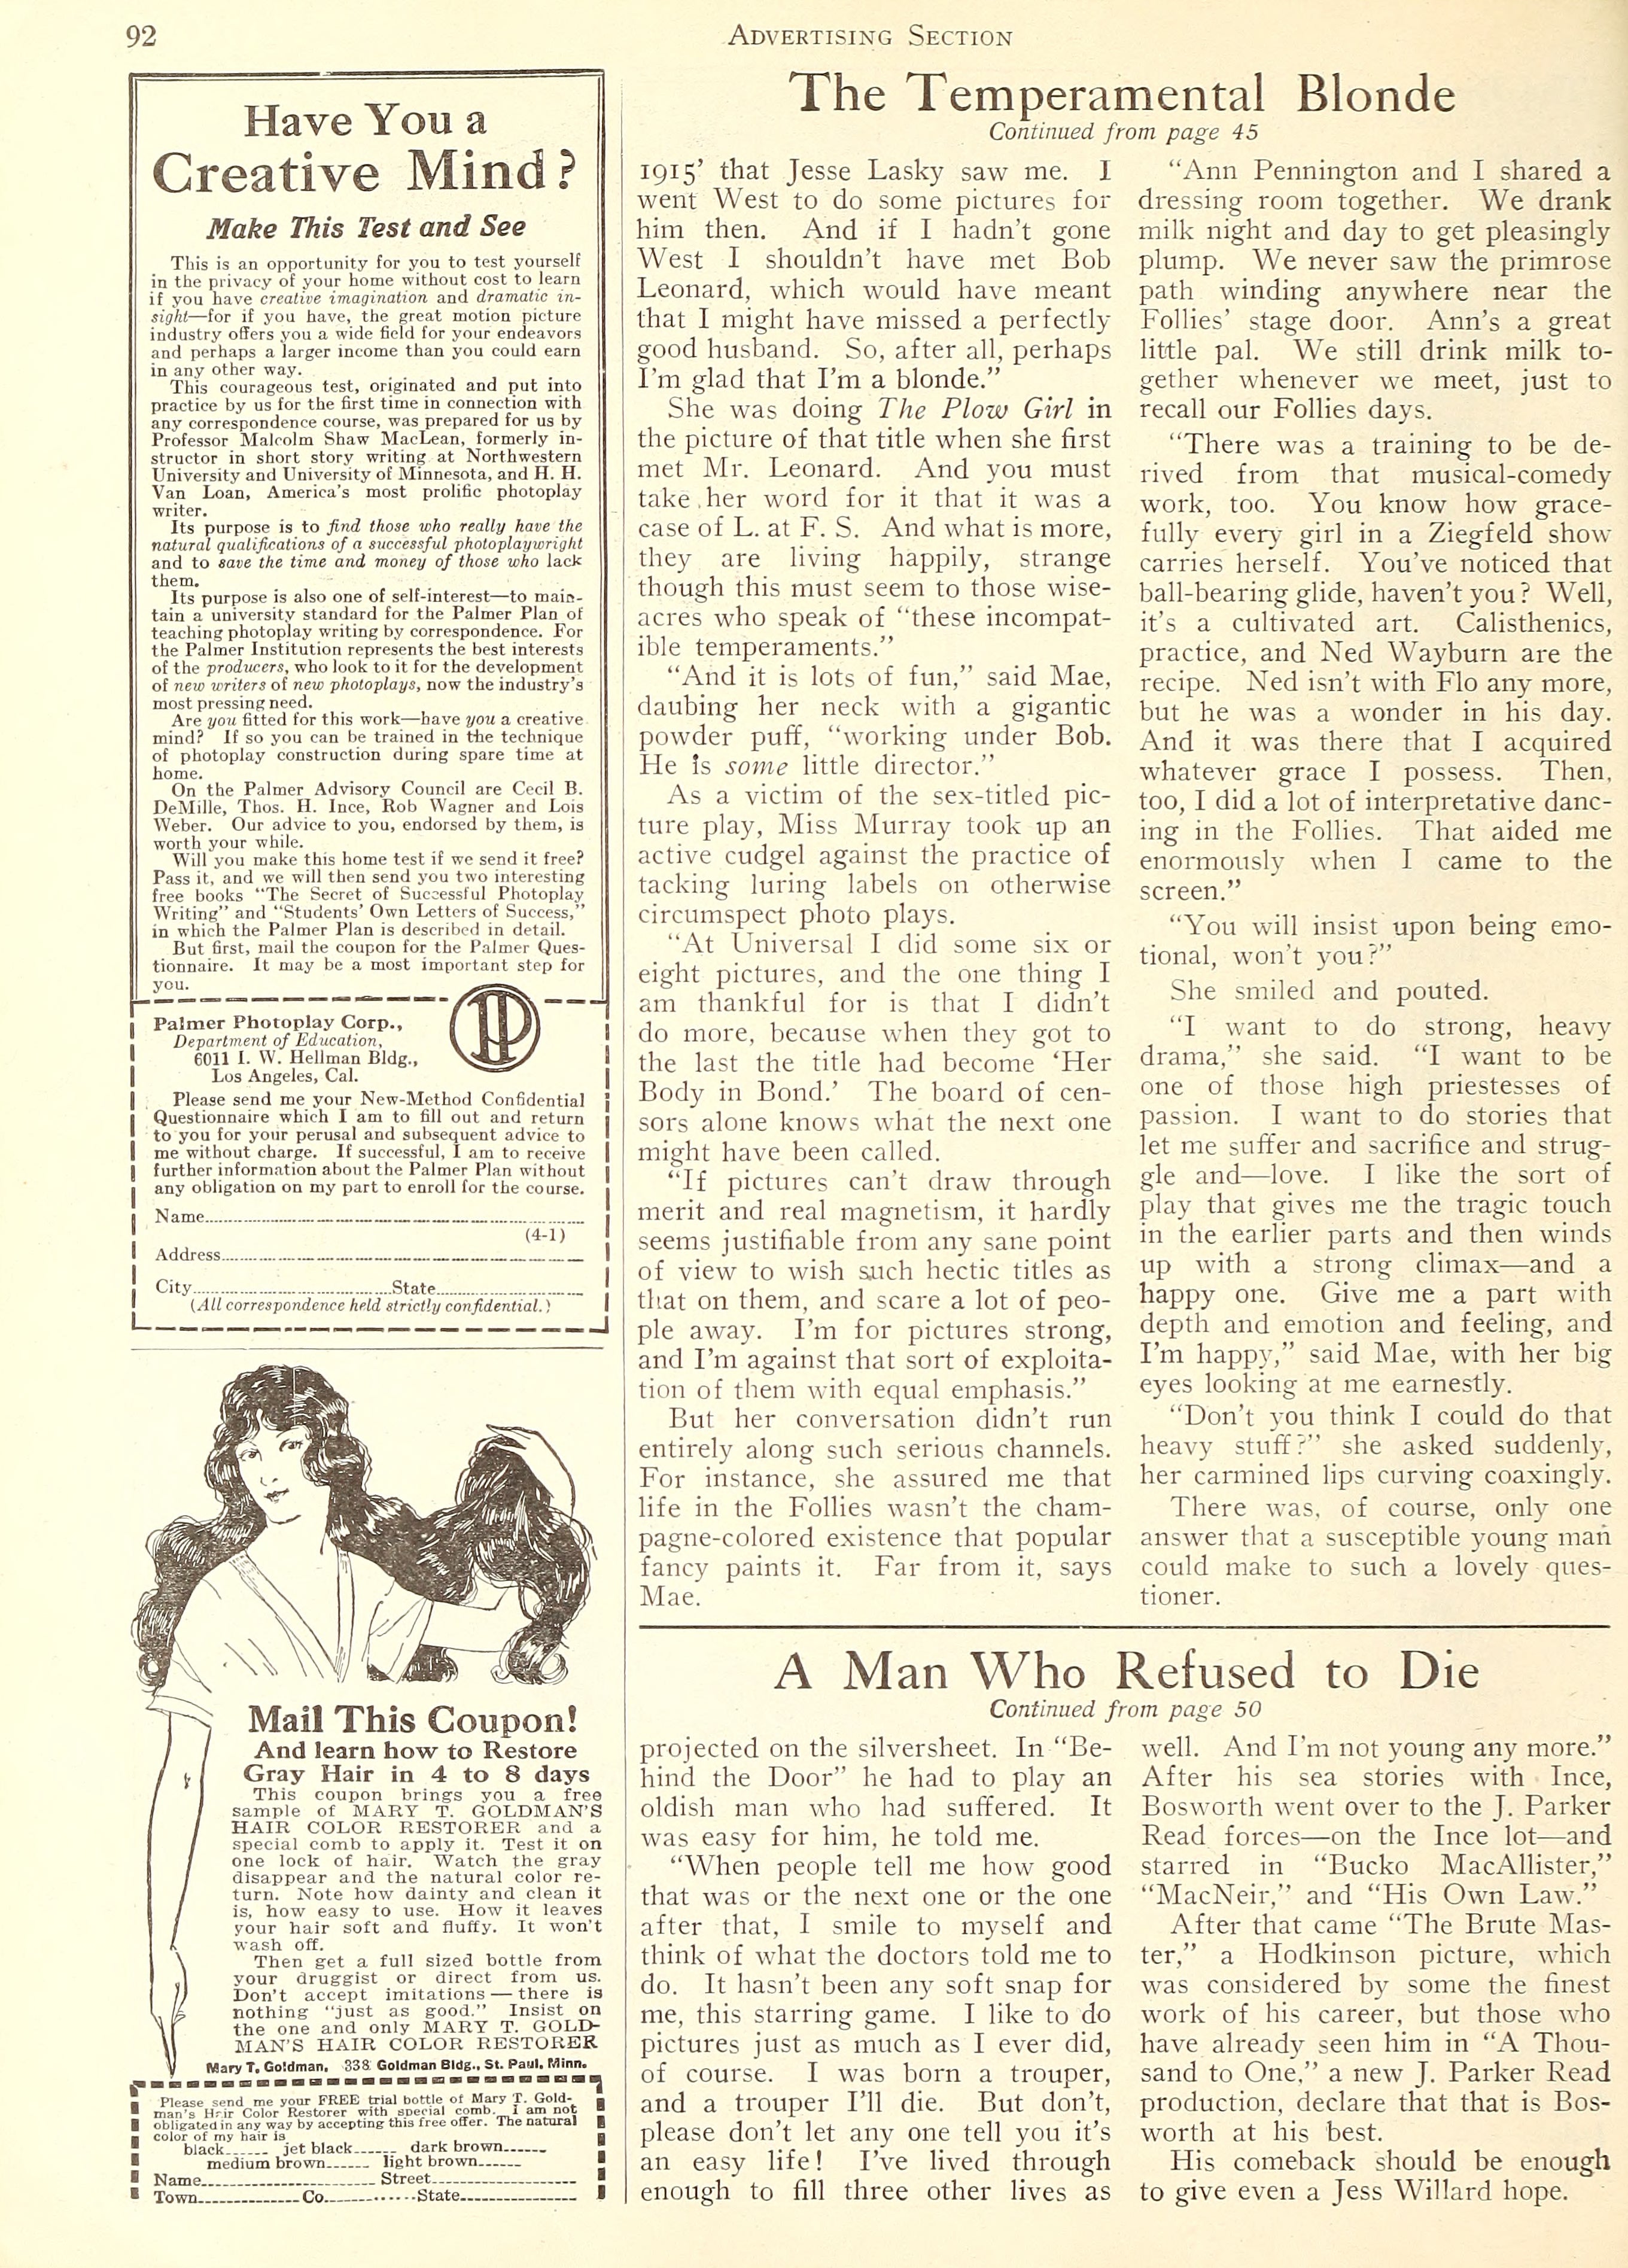 Mae Murray — The Temperamental Blonde | Hobart Bosworth — A Man Who Refused to Die | 1921 | www.vintoz.com